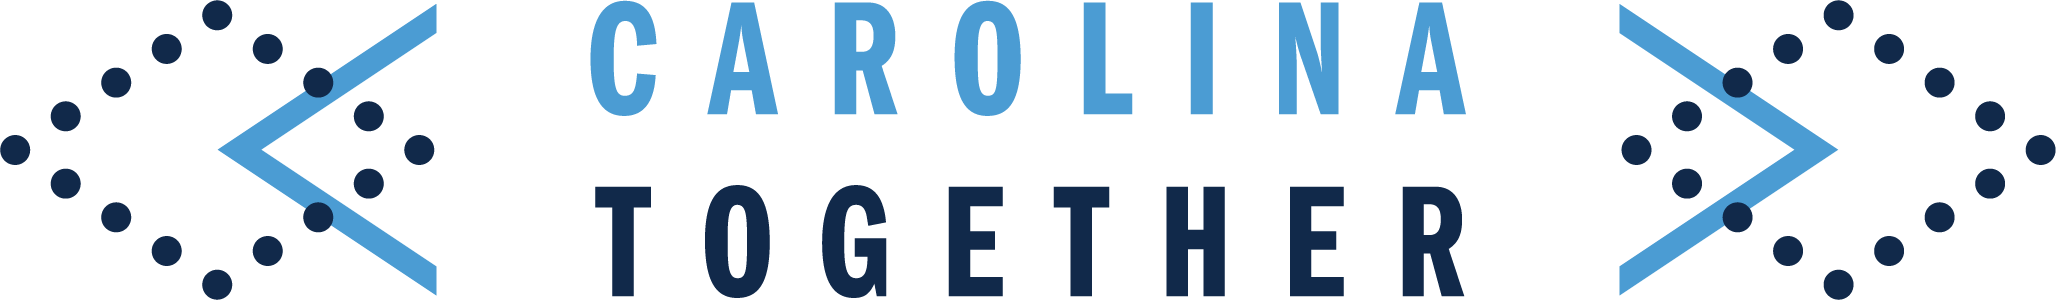 Carolina Together logo in navy and Carolina Blue.